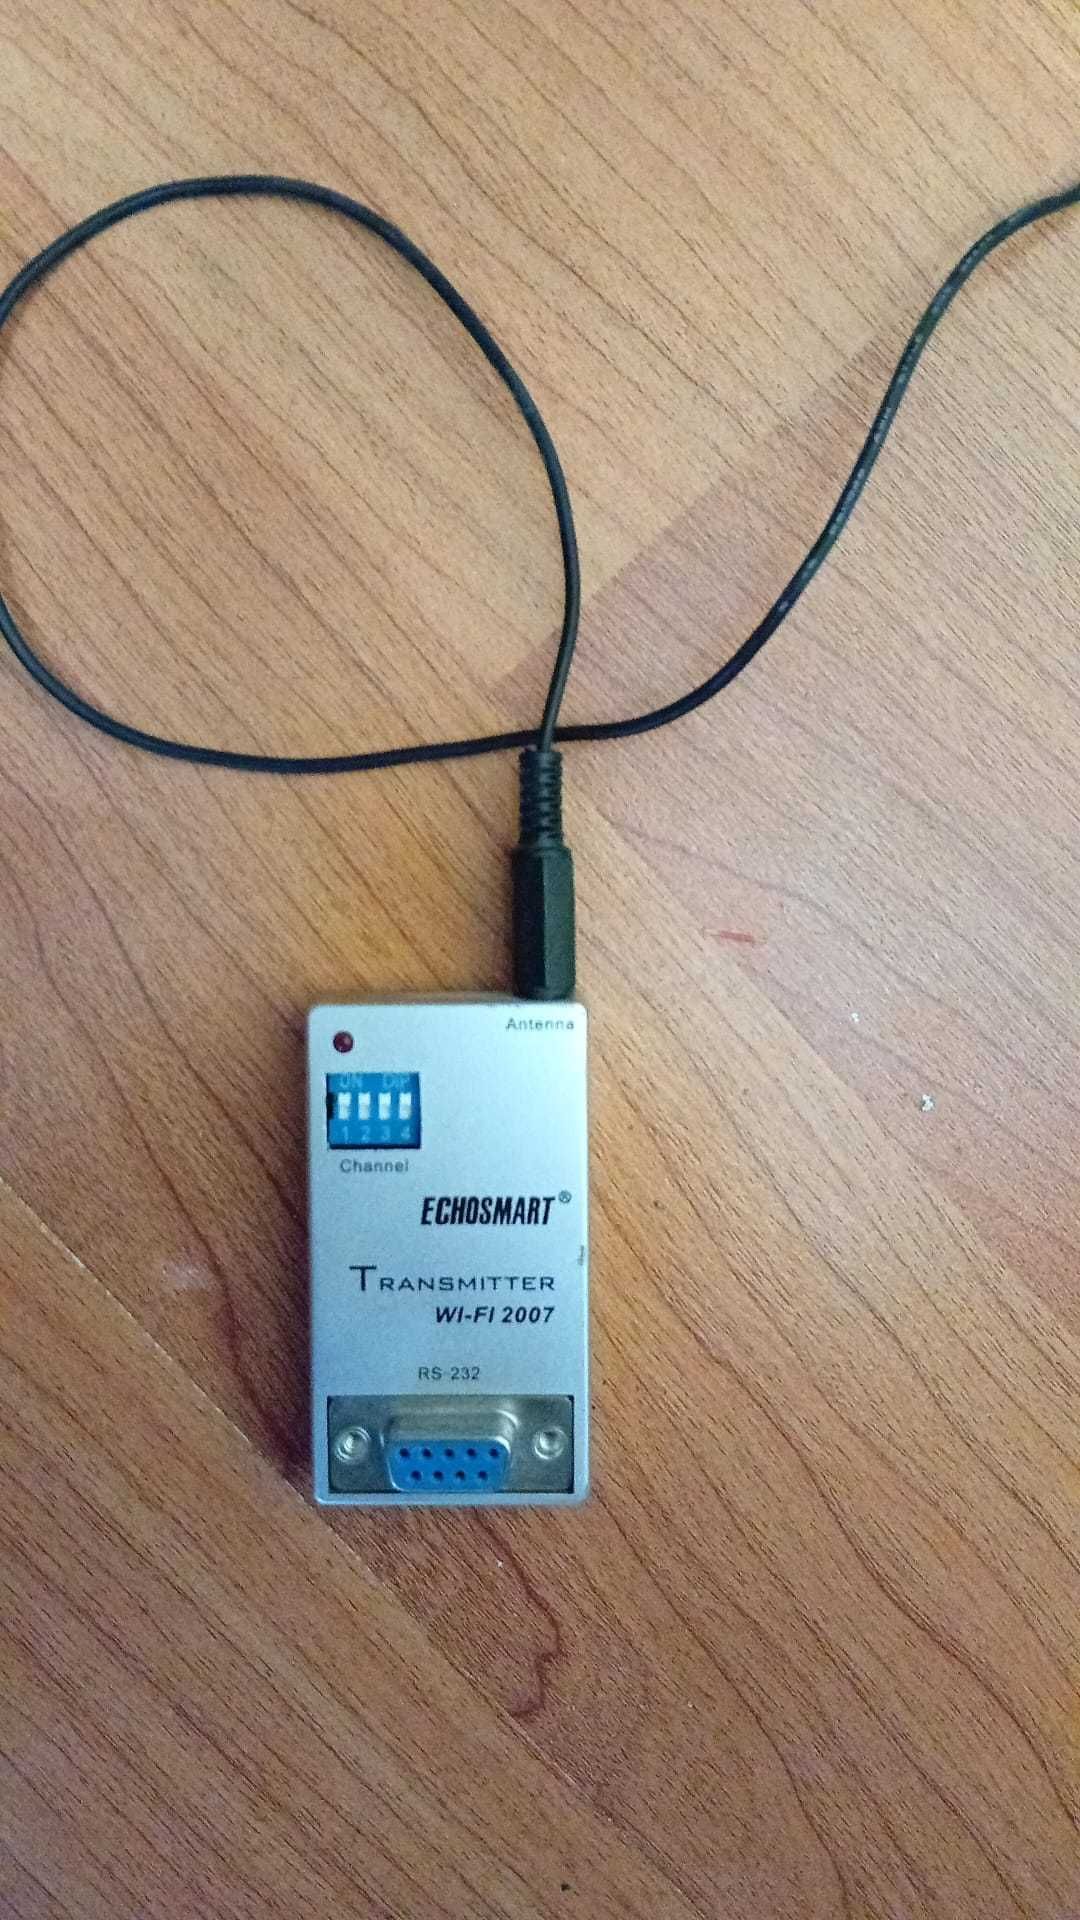 Echosmart transmitter wi-fi 2007